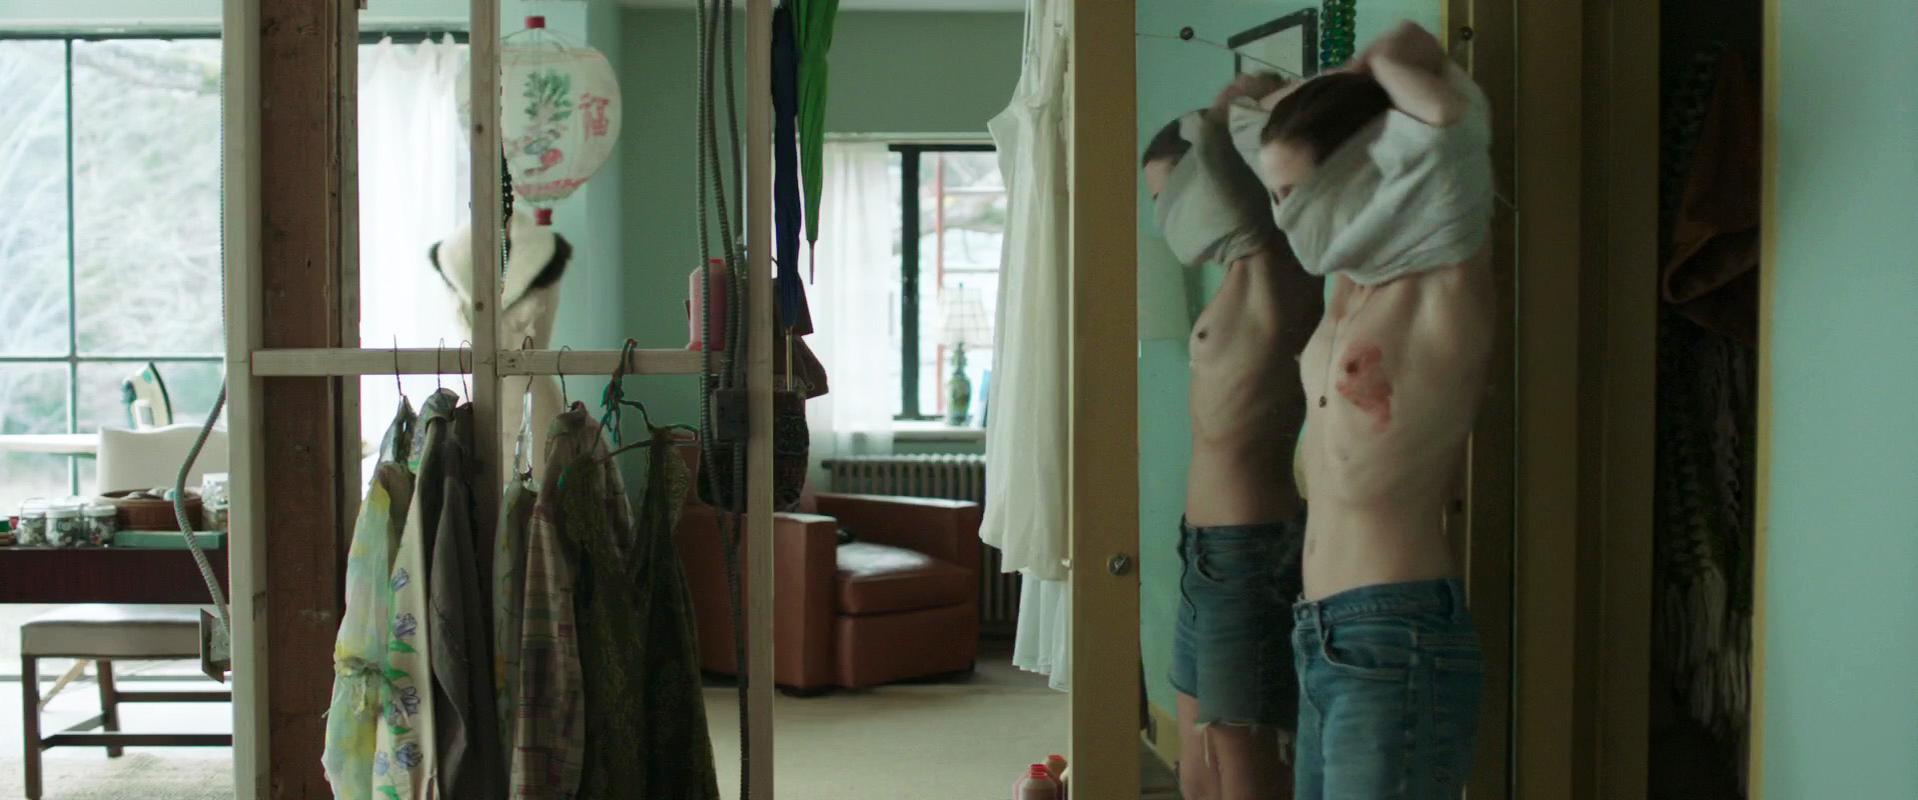 Gitte Witt nude - The Sleepwalker (2014)